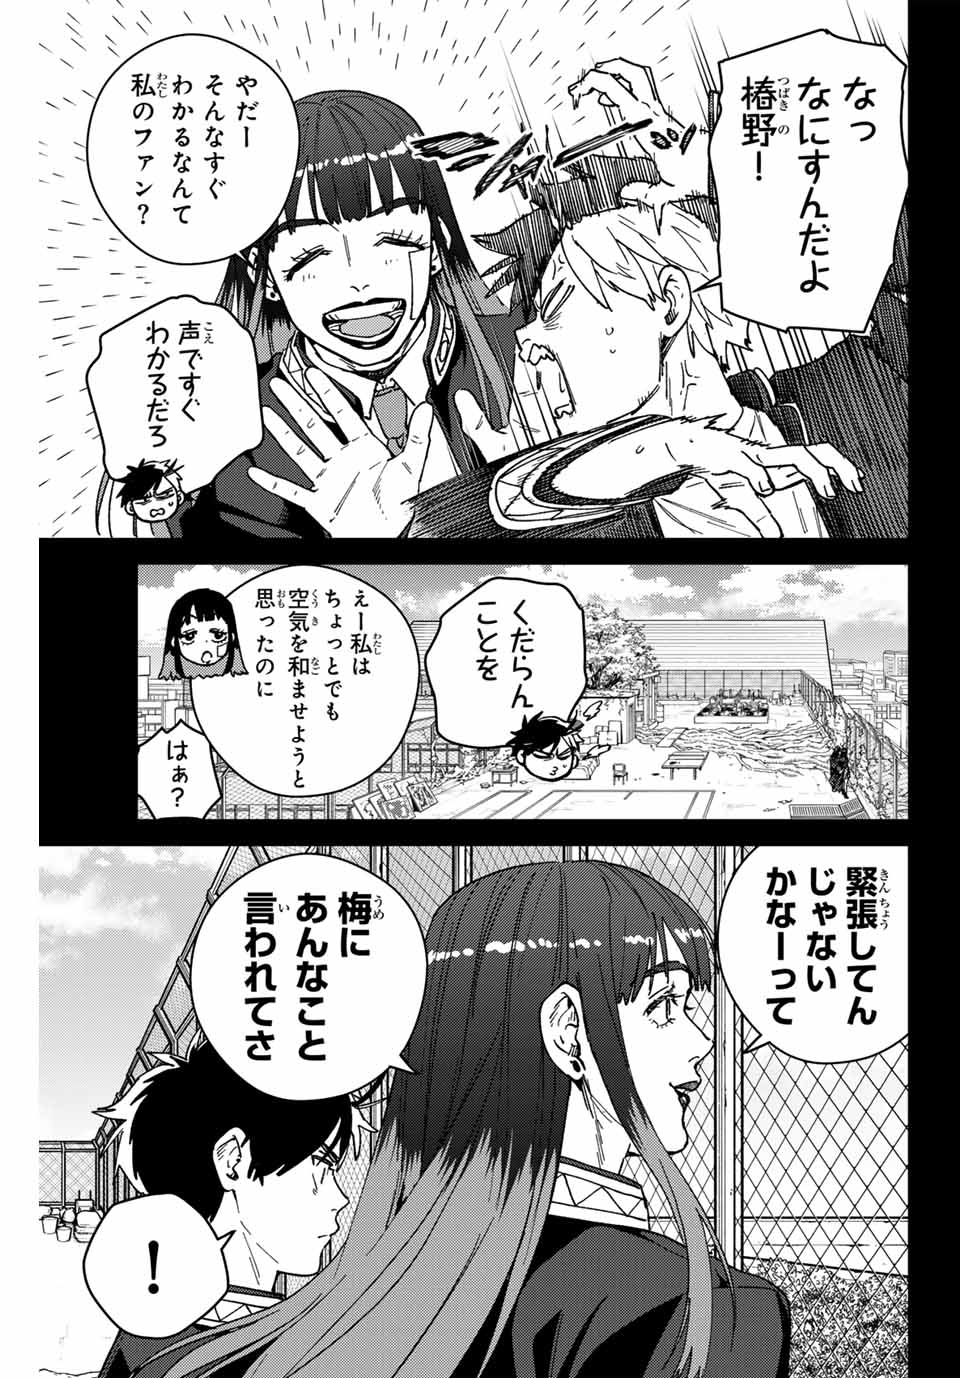 Wind Breaker (NII Satoru) - Chapter 138 - Page 3